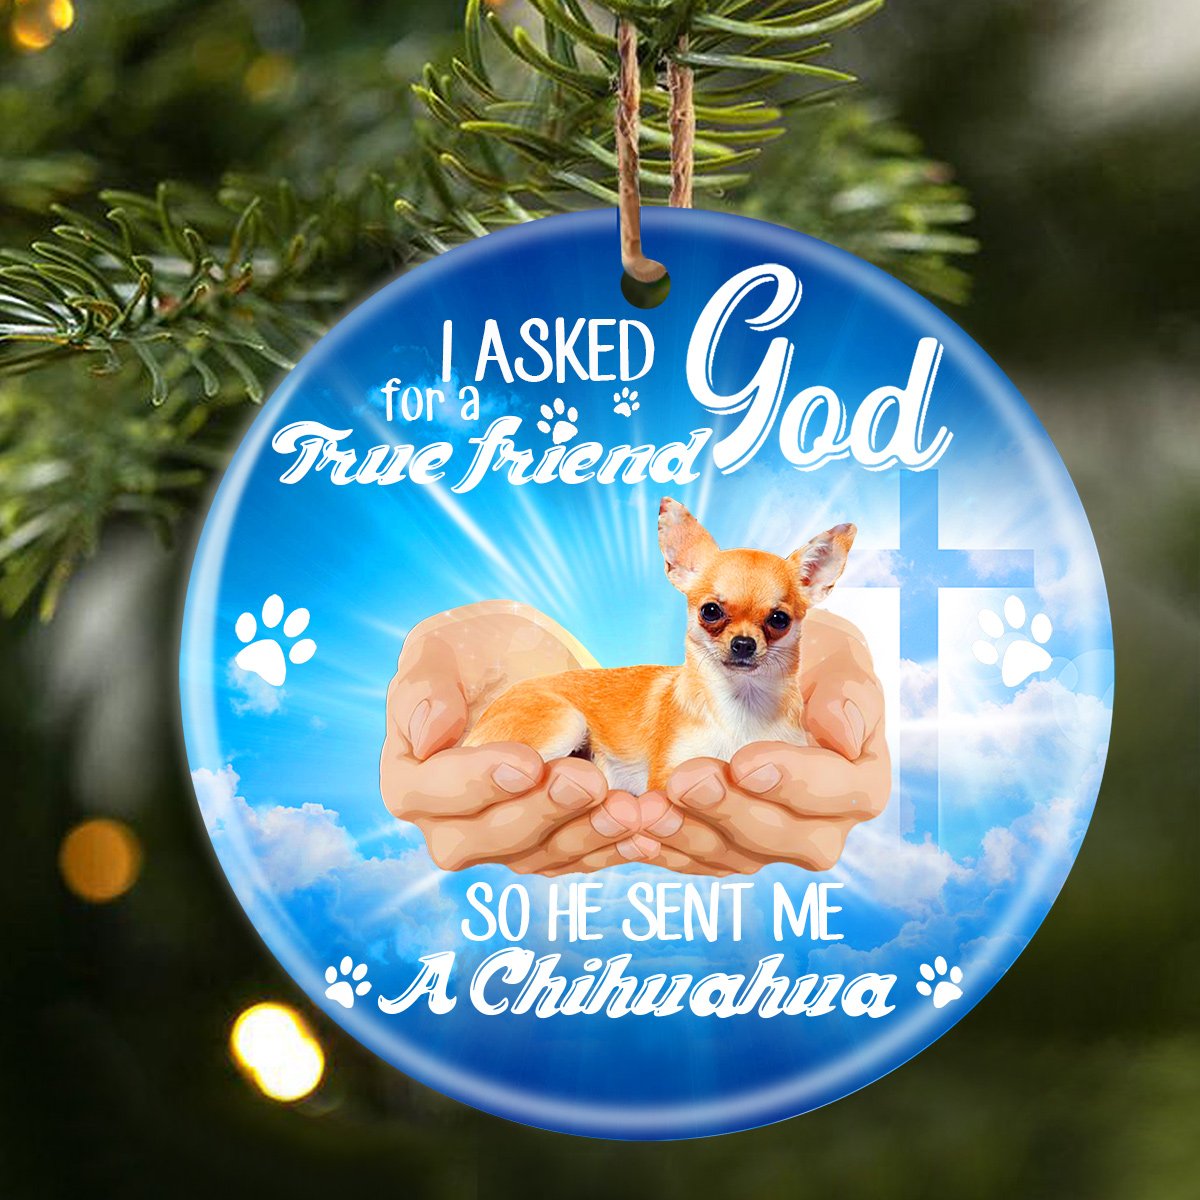 God Send Me A/An Chihuahua 2 Porcelain/Ceramic Ornament